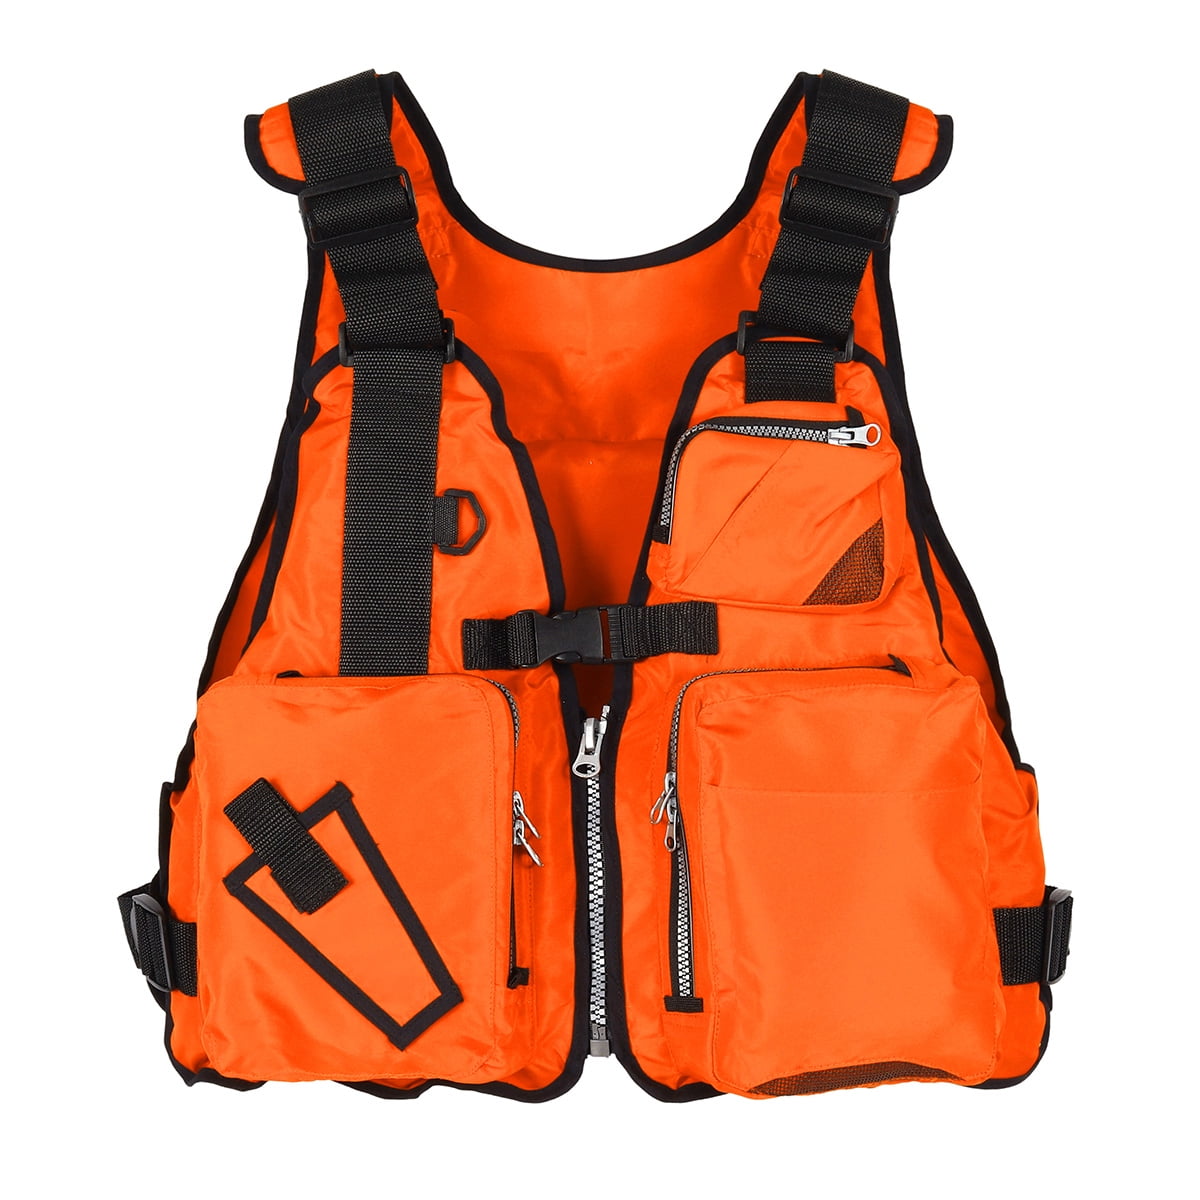 2x Adults Kids Life Jacket Swimming Fishing Floating Kayak Buoyancy Aid Vest 